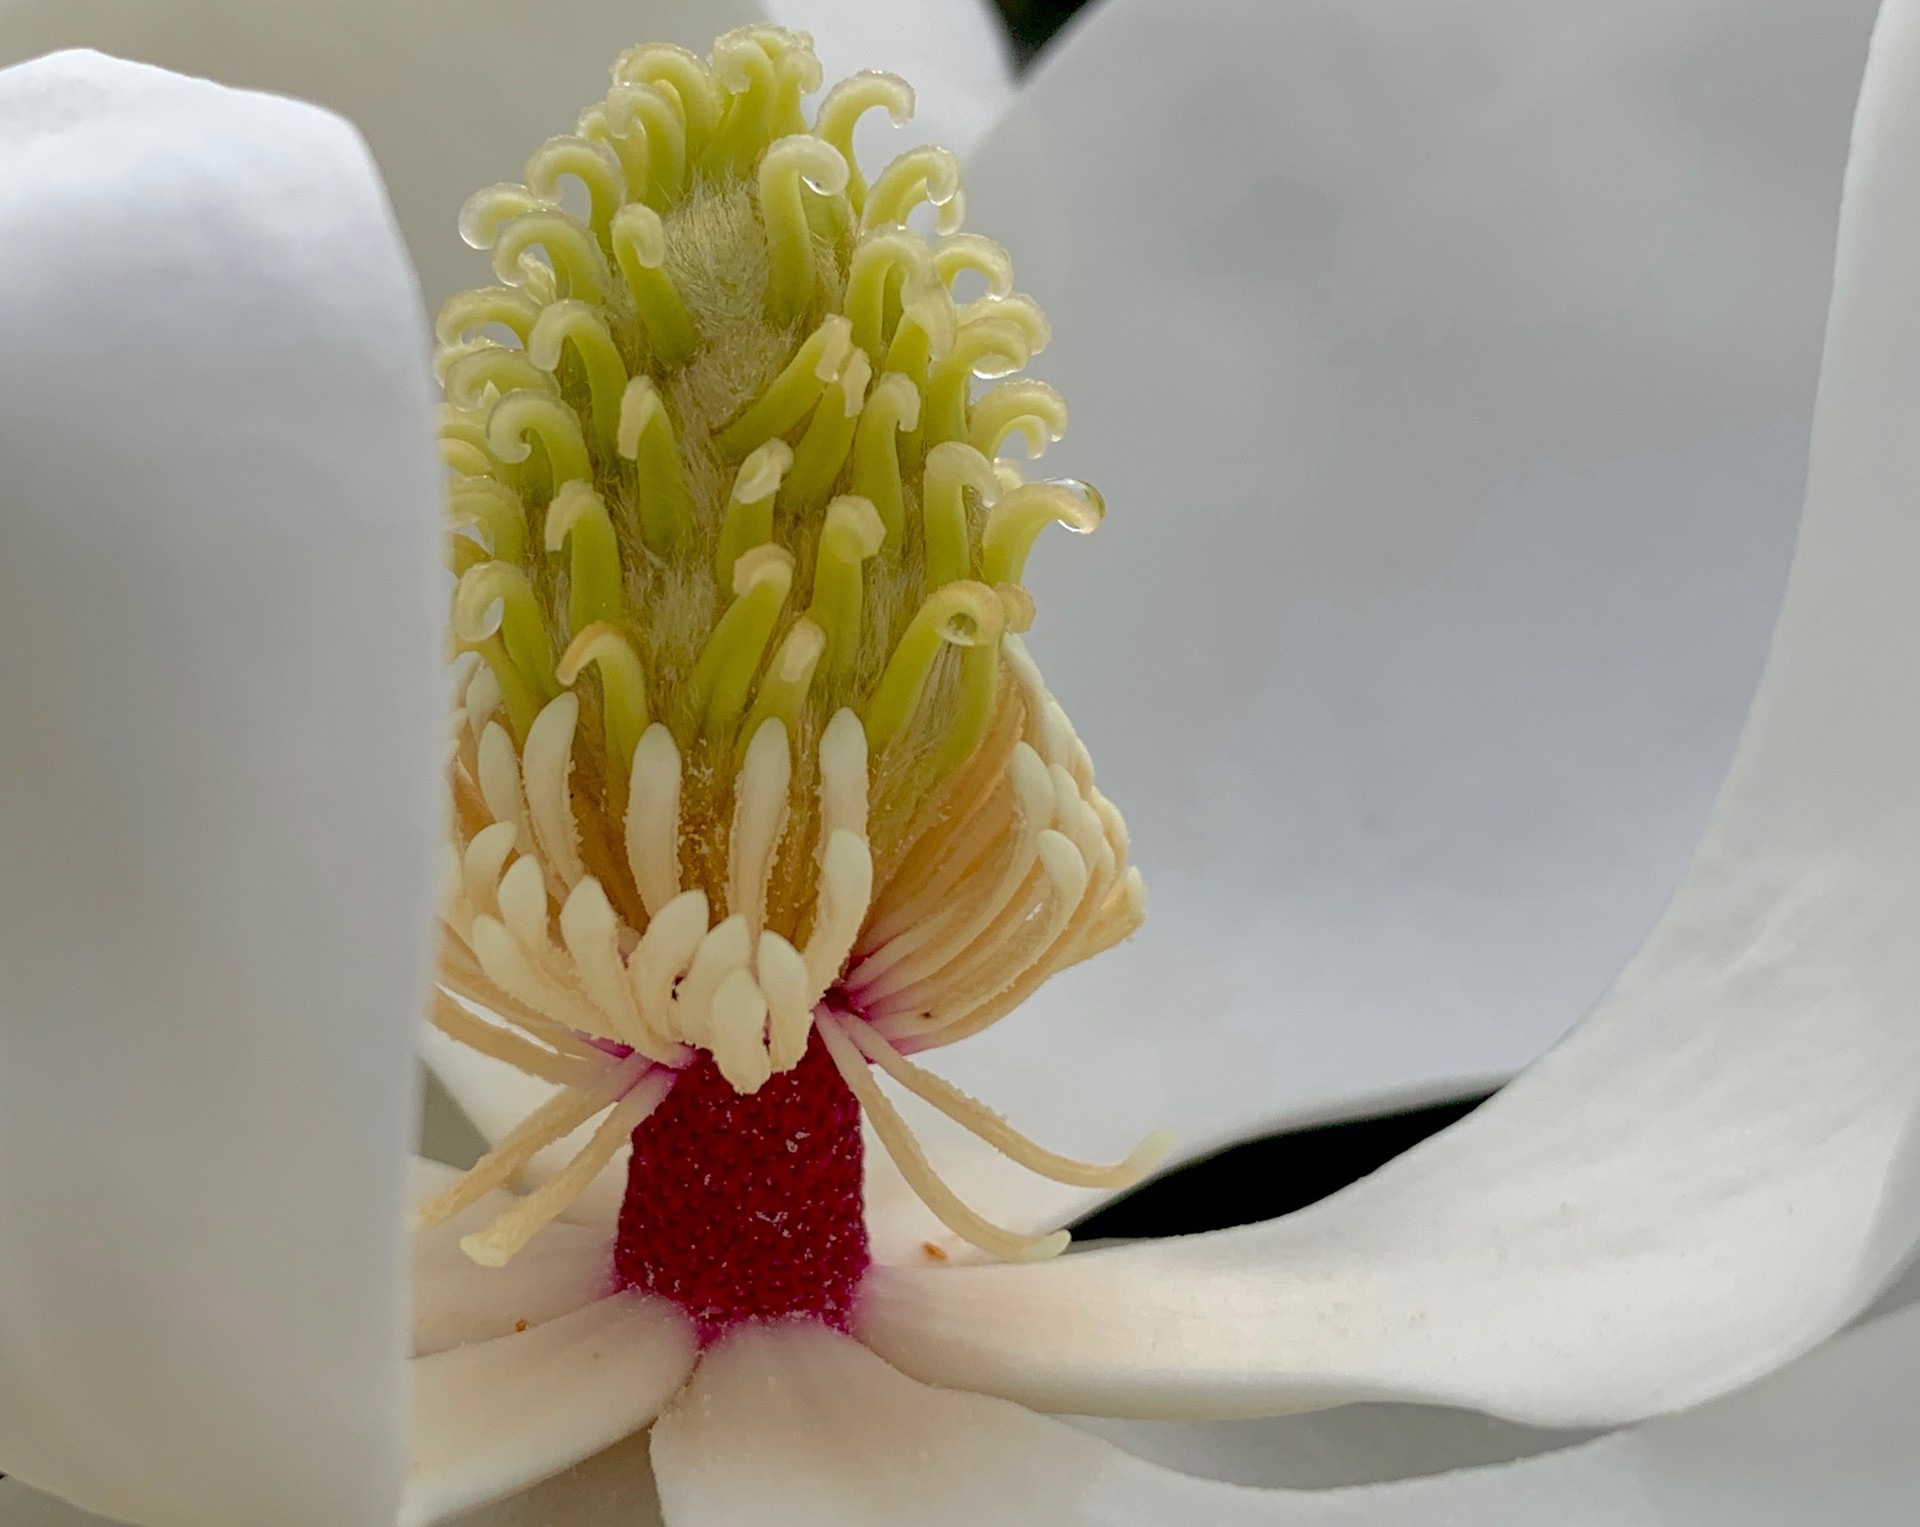 Little Gem Magnolia by Amy Kaslow